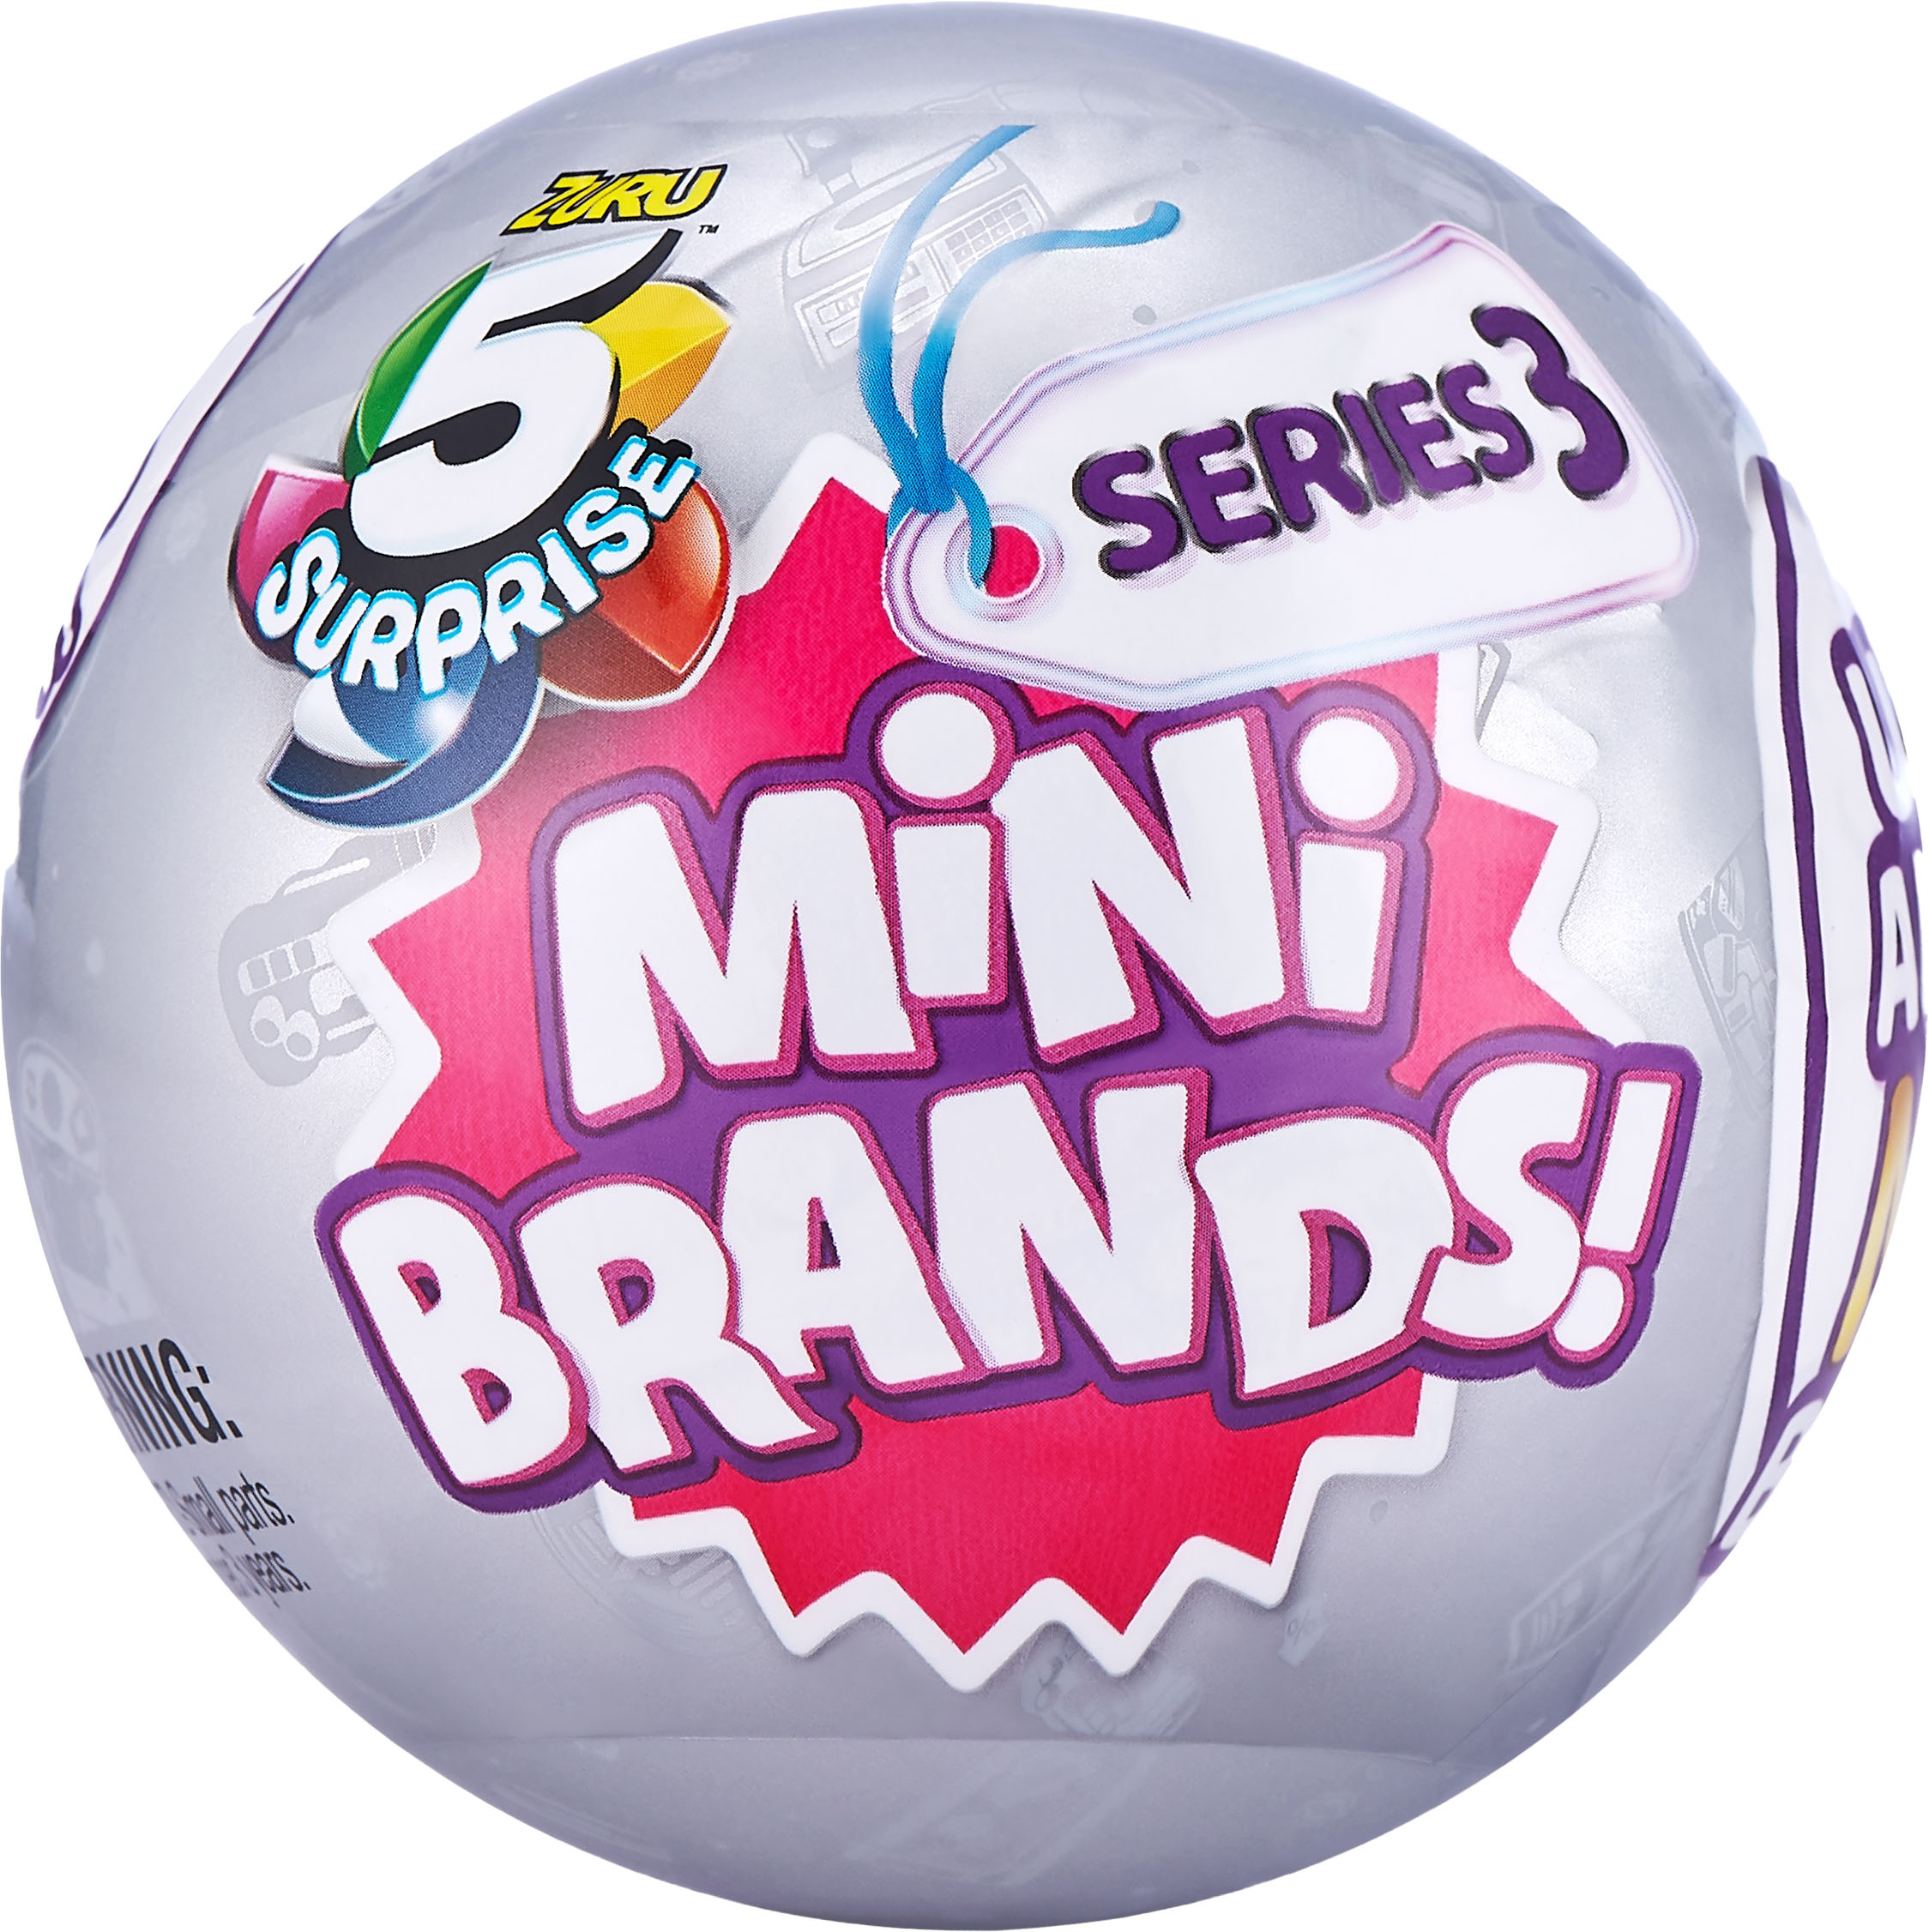 ZURU Series 1 5 Surprise Toy Mini Brands Surprise Ball for sale online